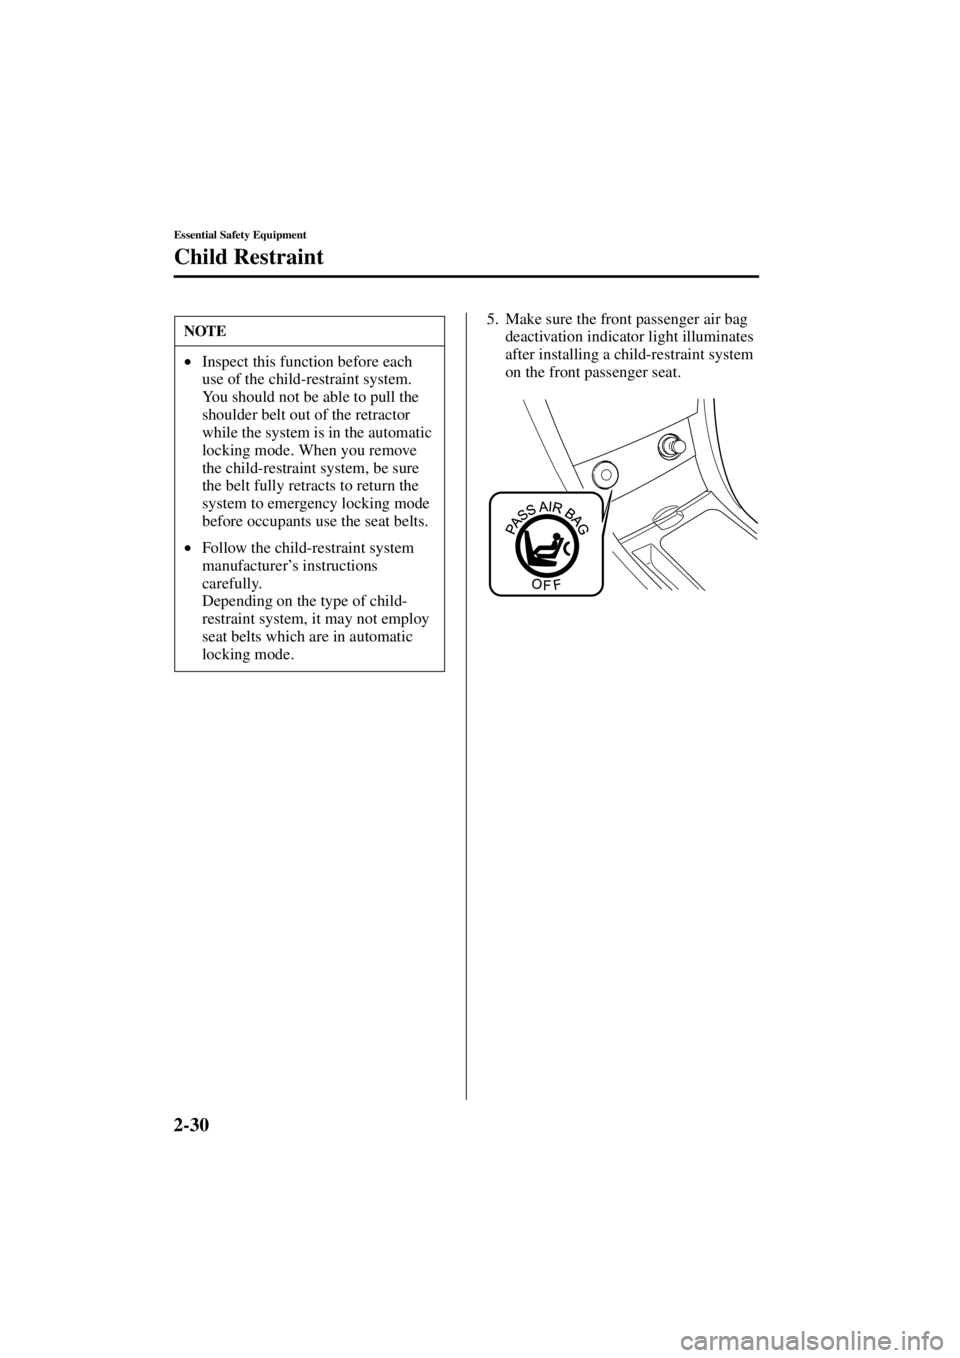 MAZDA MODEL 3 5-DOOR 2004 User Guide 2-30
Essential Safety Equipment
Child Restraint
Form No. 8S18-EA-03I
5. Make sure the front passenger air bag deactivation indicator light illuminates 
after installing a child-restraint system 
on th